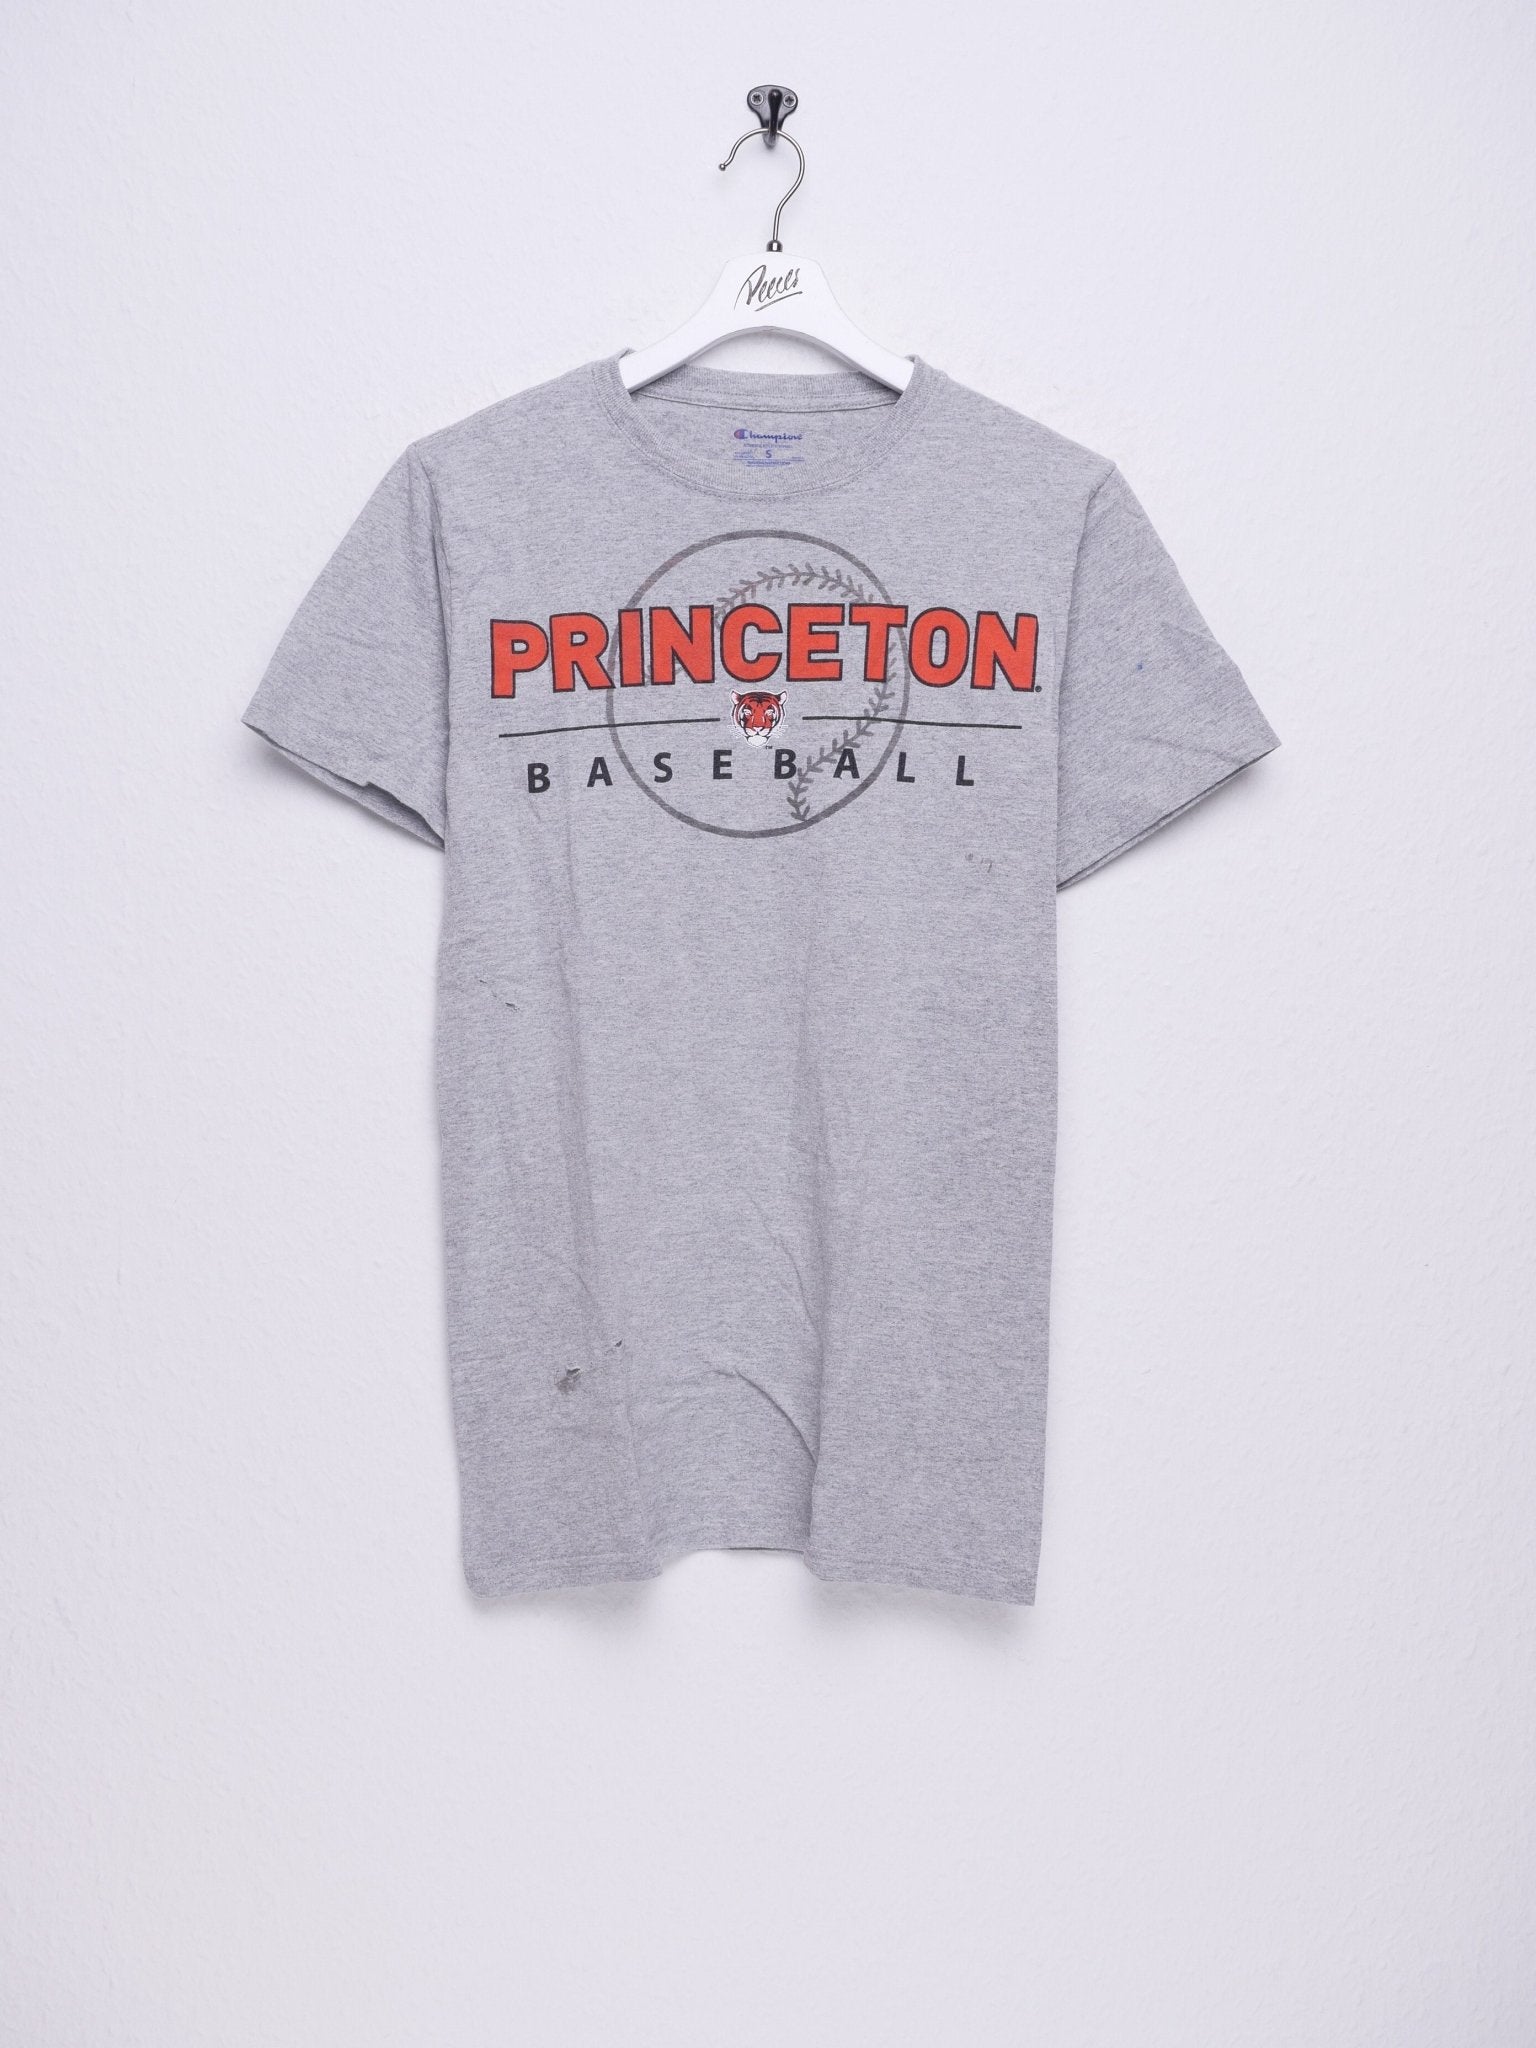 champion 'princeton Baseball' printed Logo grey Shirt - Peeces